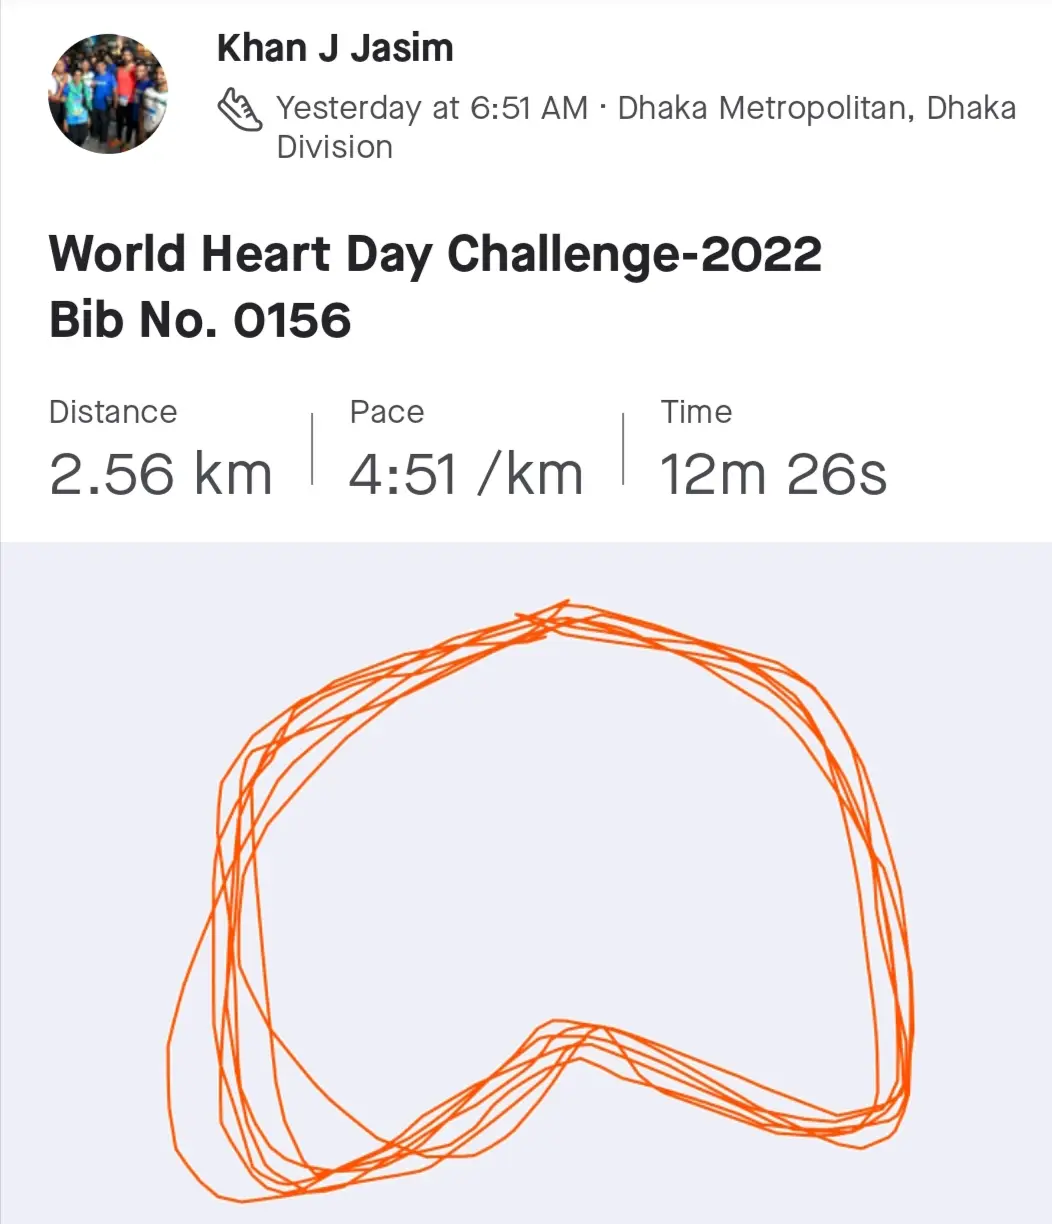 World Heart Day Challenge-2022 Bib No. 0156